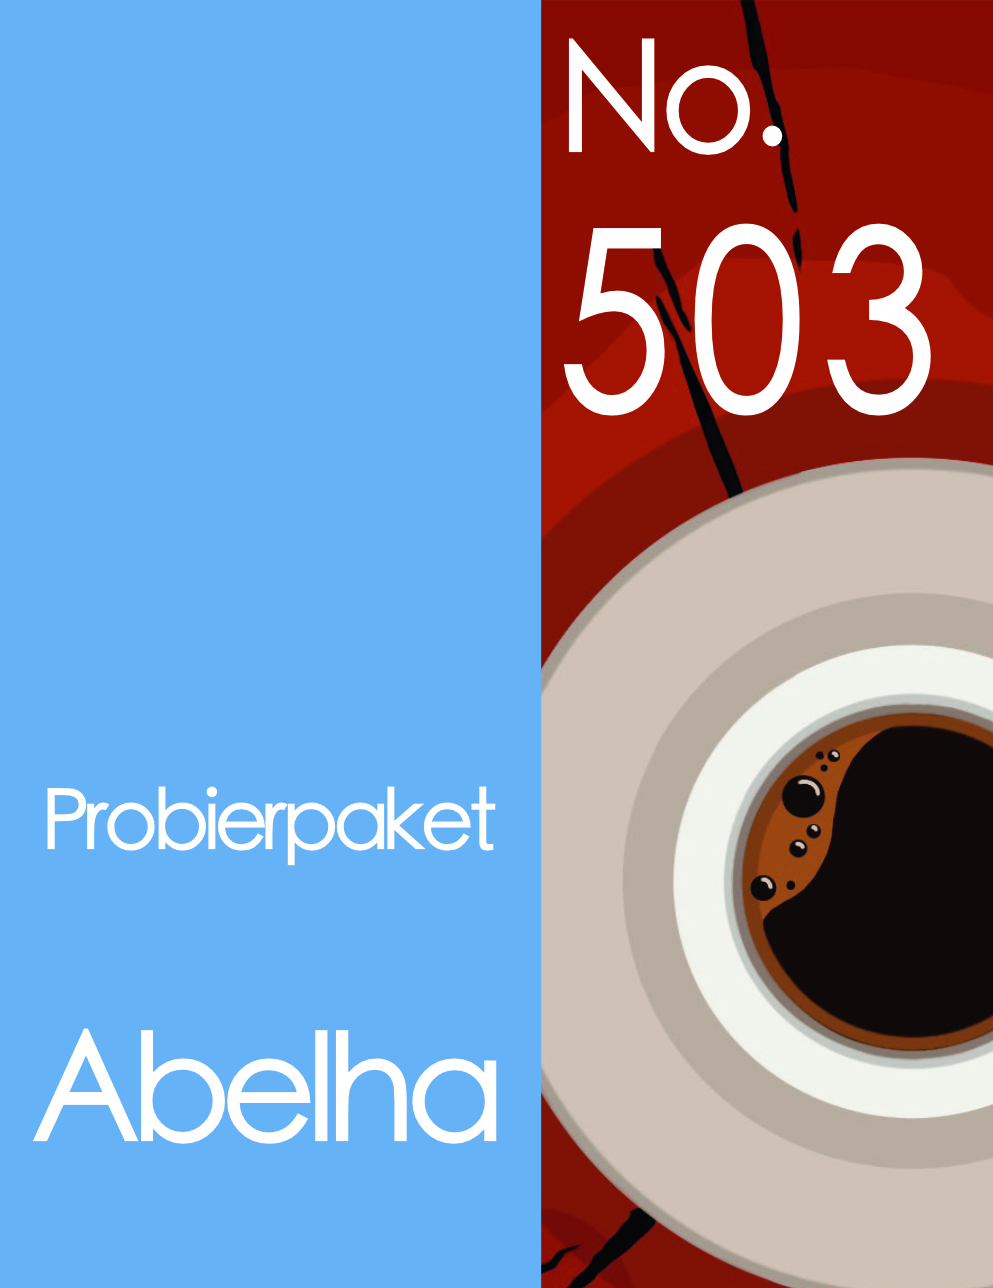 No. 503 - Probierpaket "Abelha" - 3 x 250g